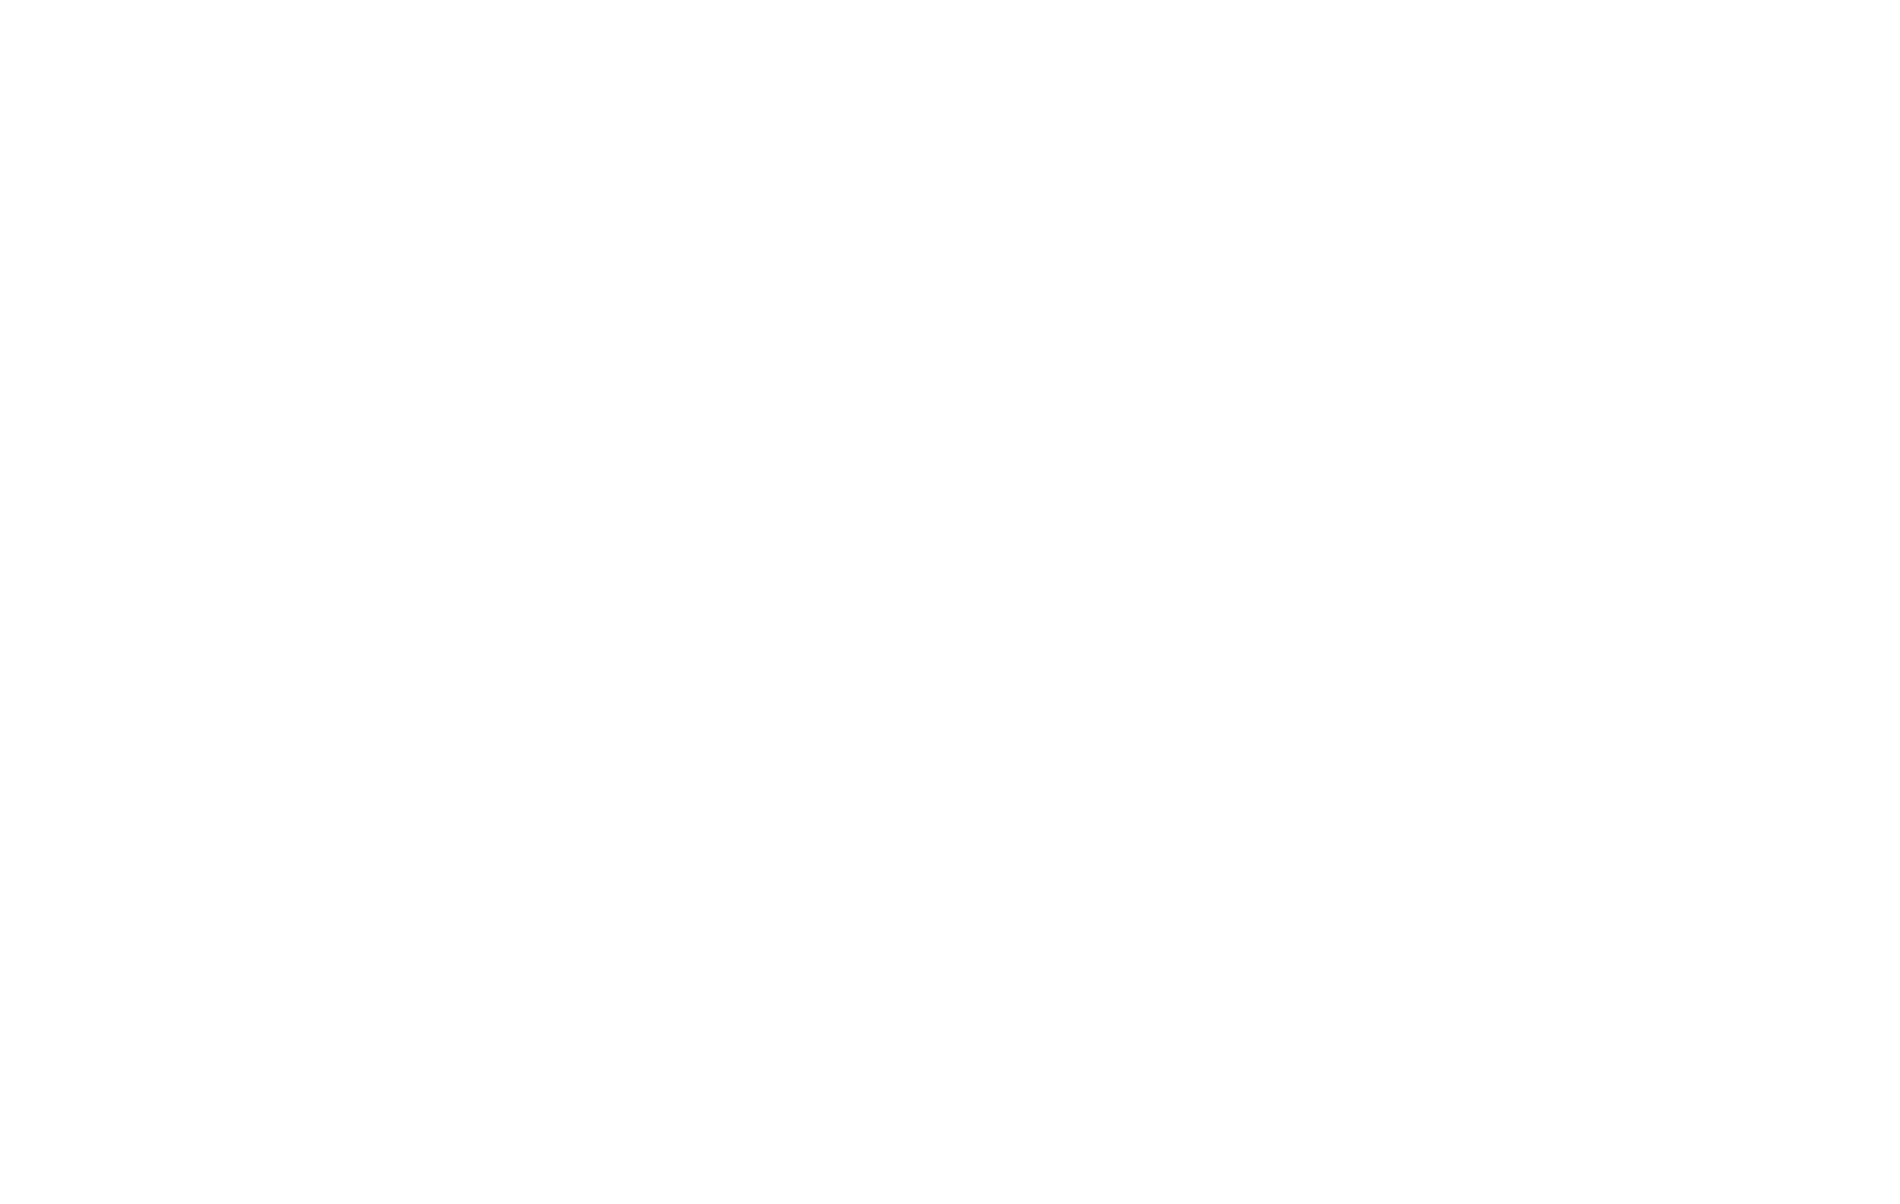 klaud_logo_transparent_bg